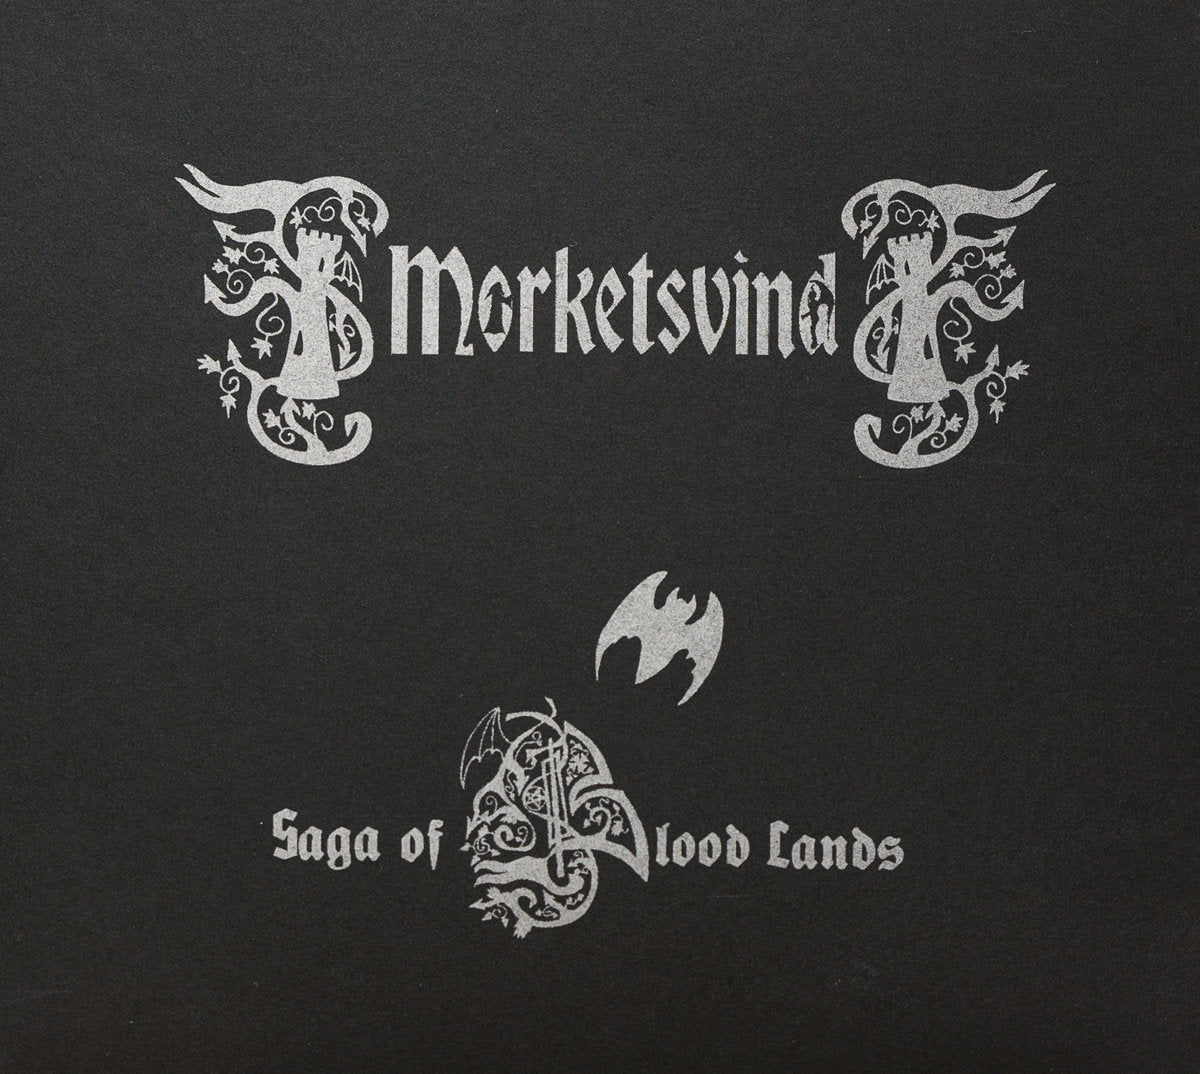 [SOLD OUT] MORKETSVIND "Saga of Blood Lands" CD digipak